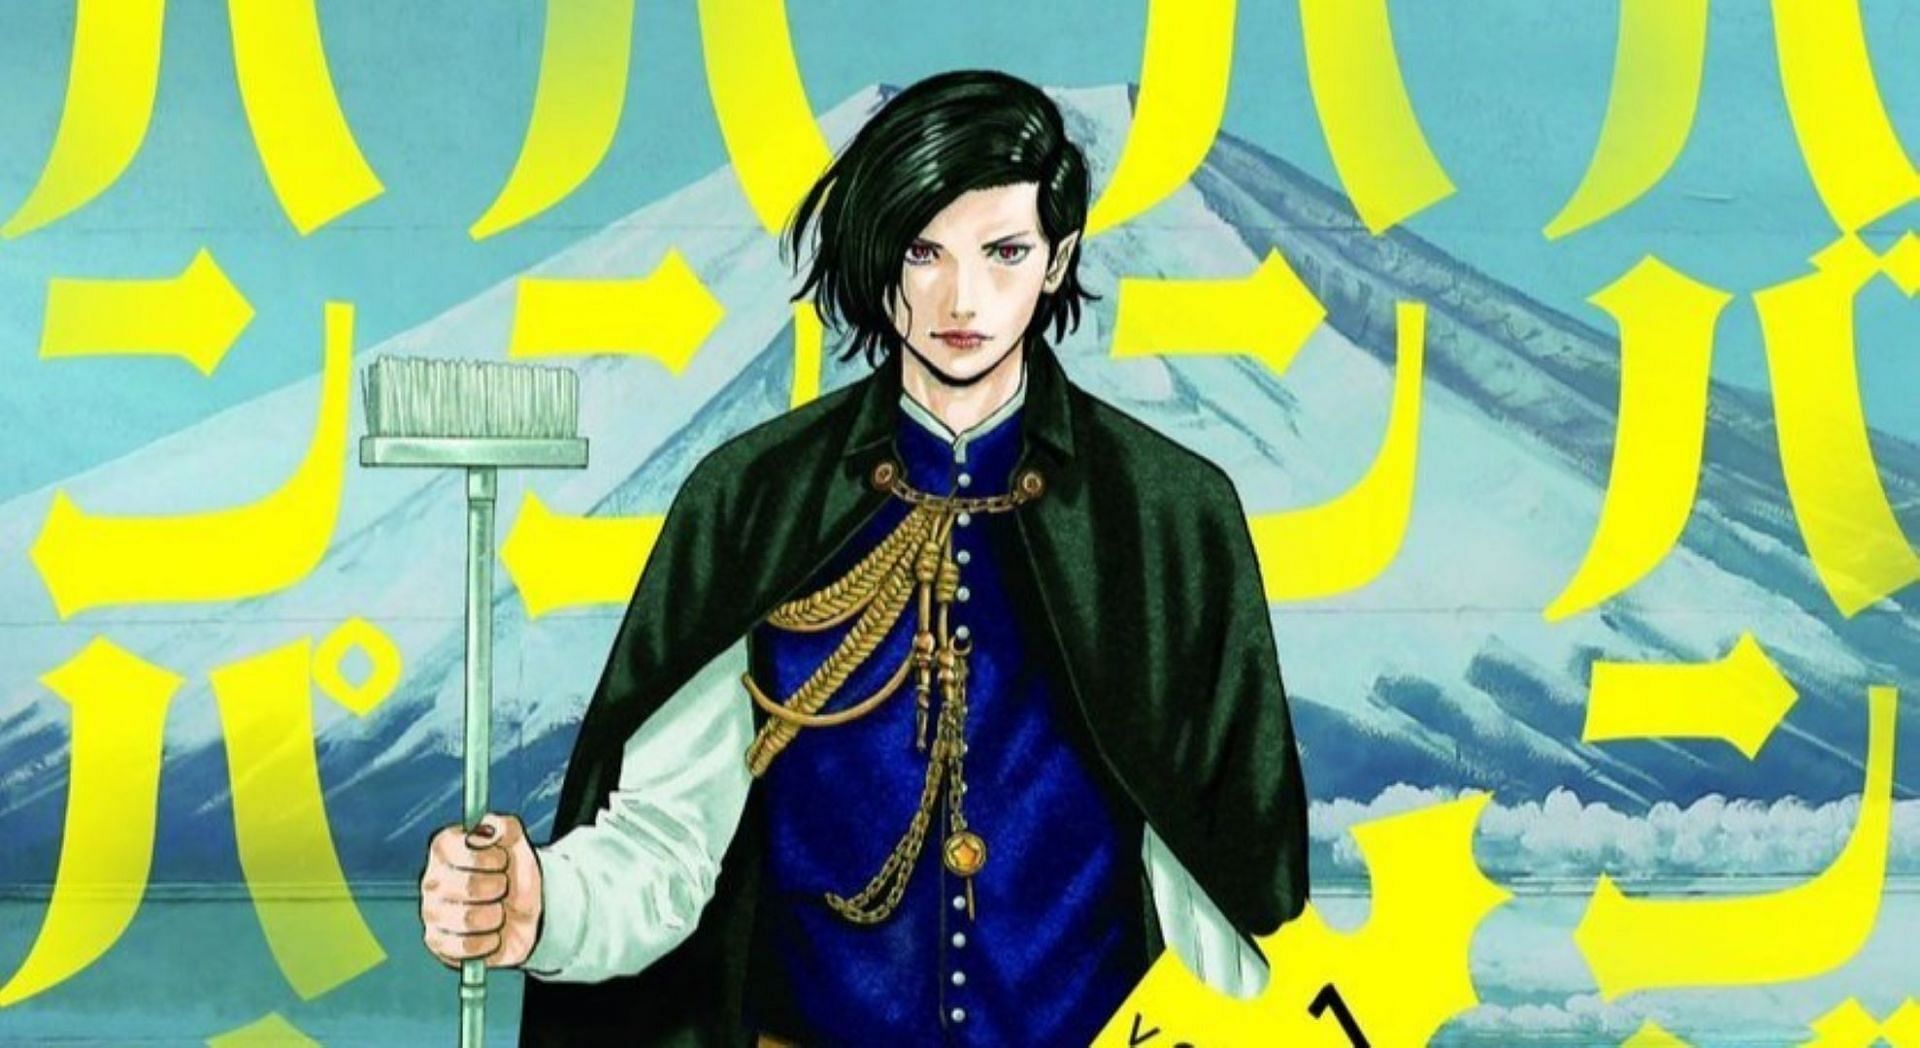 Ranmaru, as seen in the volume cover of the manga (Image via Hiromasa Okujima/Akita Shoten)